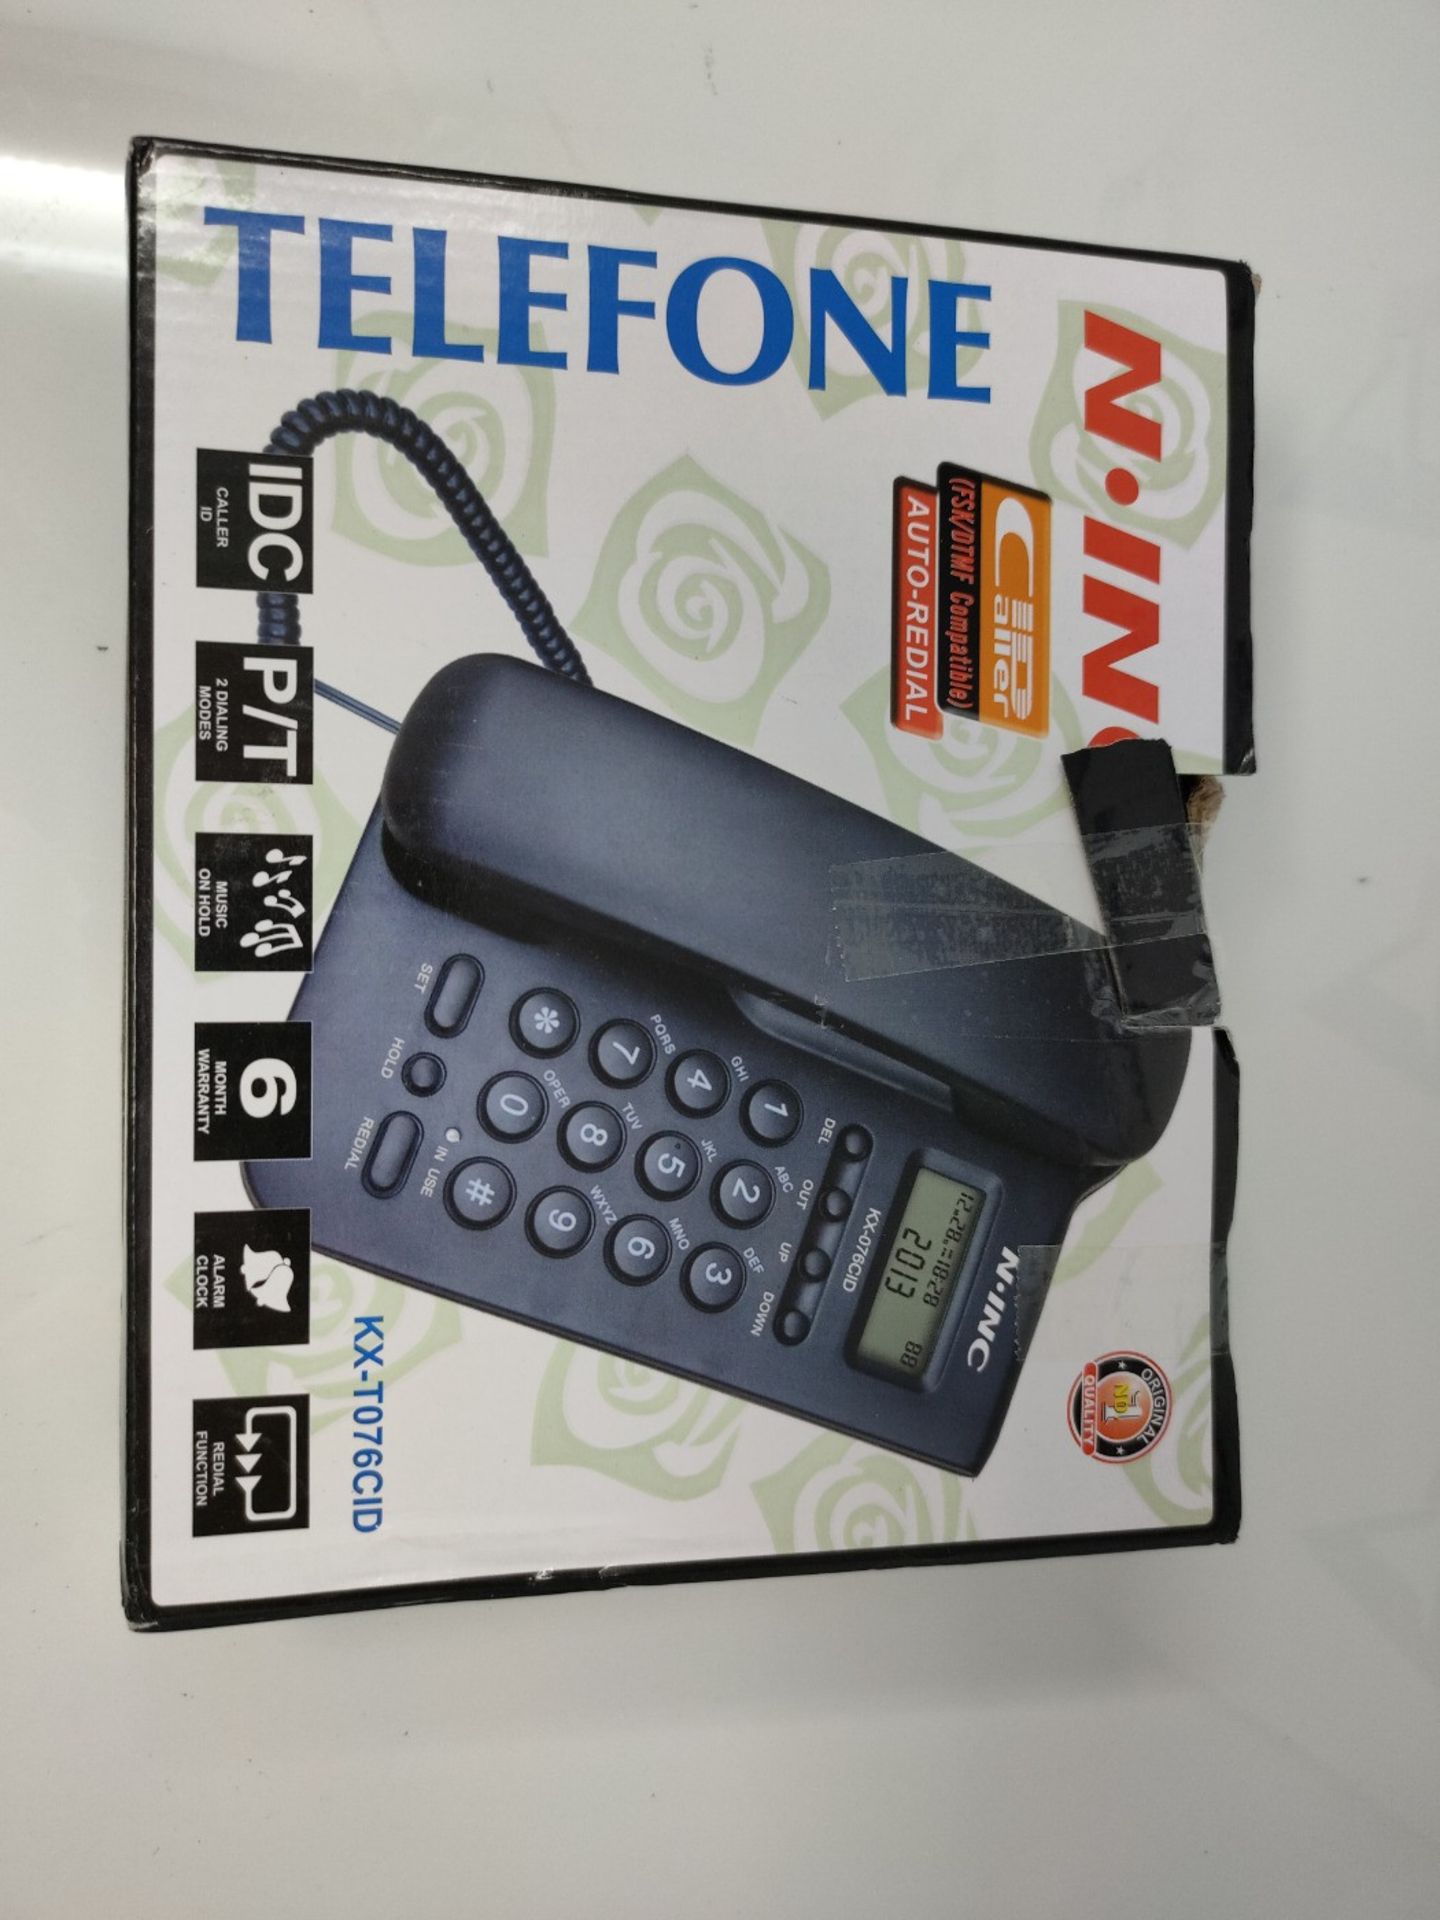 Kabelgebundenes schnurgebundenes Telefon, Festnetztelefon mit Festnetzanschluss (FSK/D